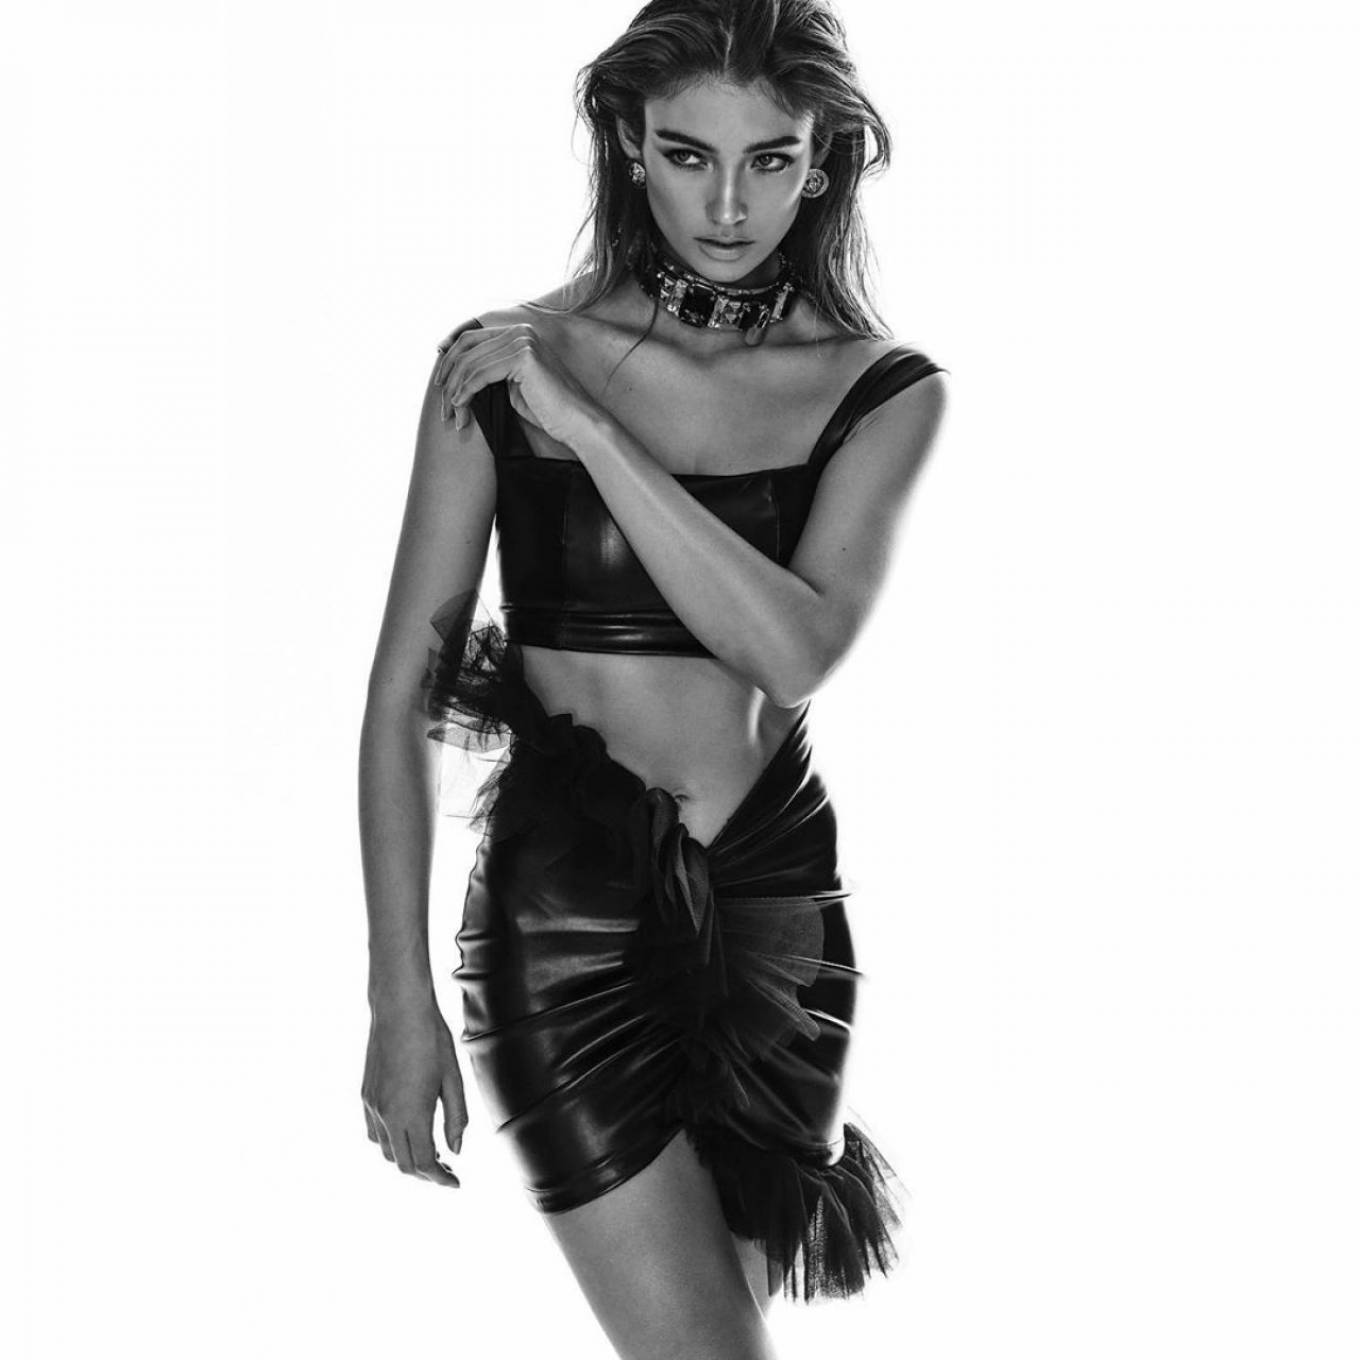 Lorena Rae 2020 : Lorena Rae – Modeliste Magazine 2020 adds-11